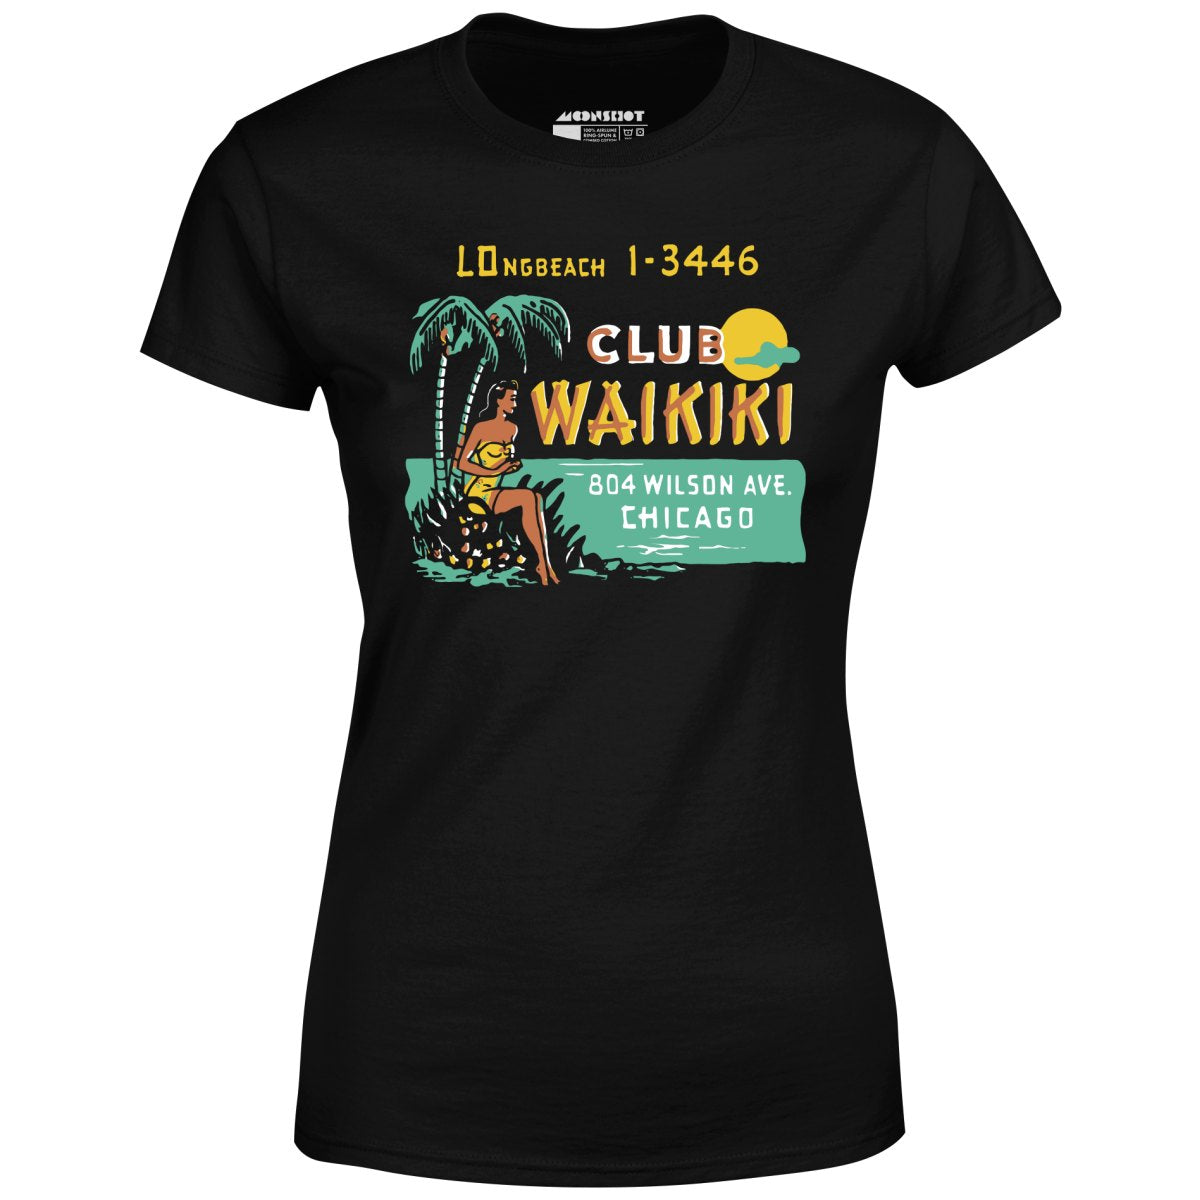 Club Waikiki v2 - Chicago, IL - Vintage Tiki Bar - Women's T-Shirt